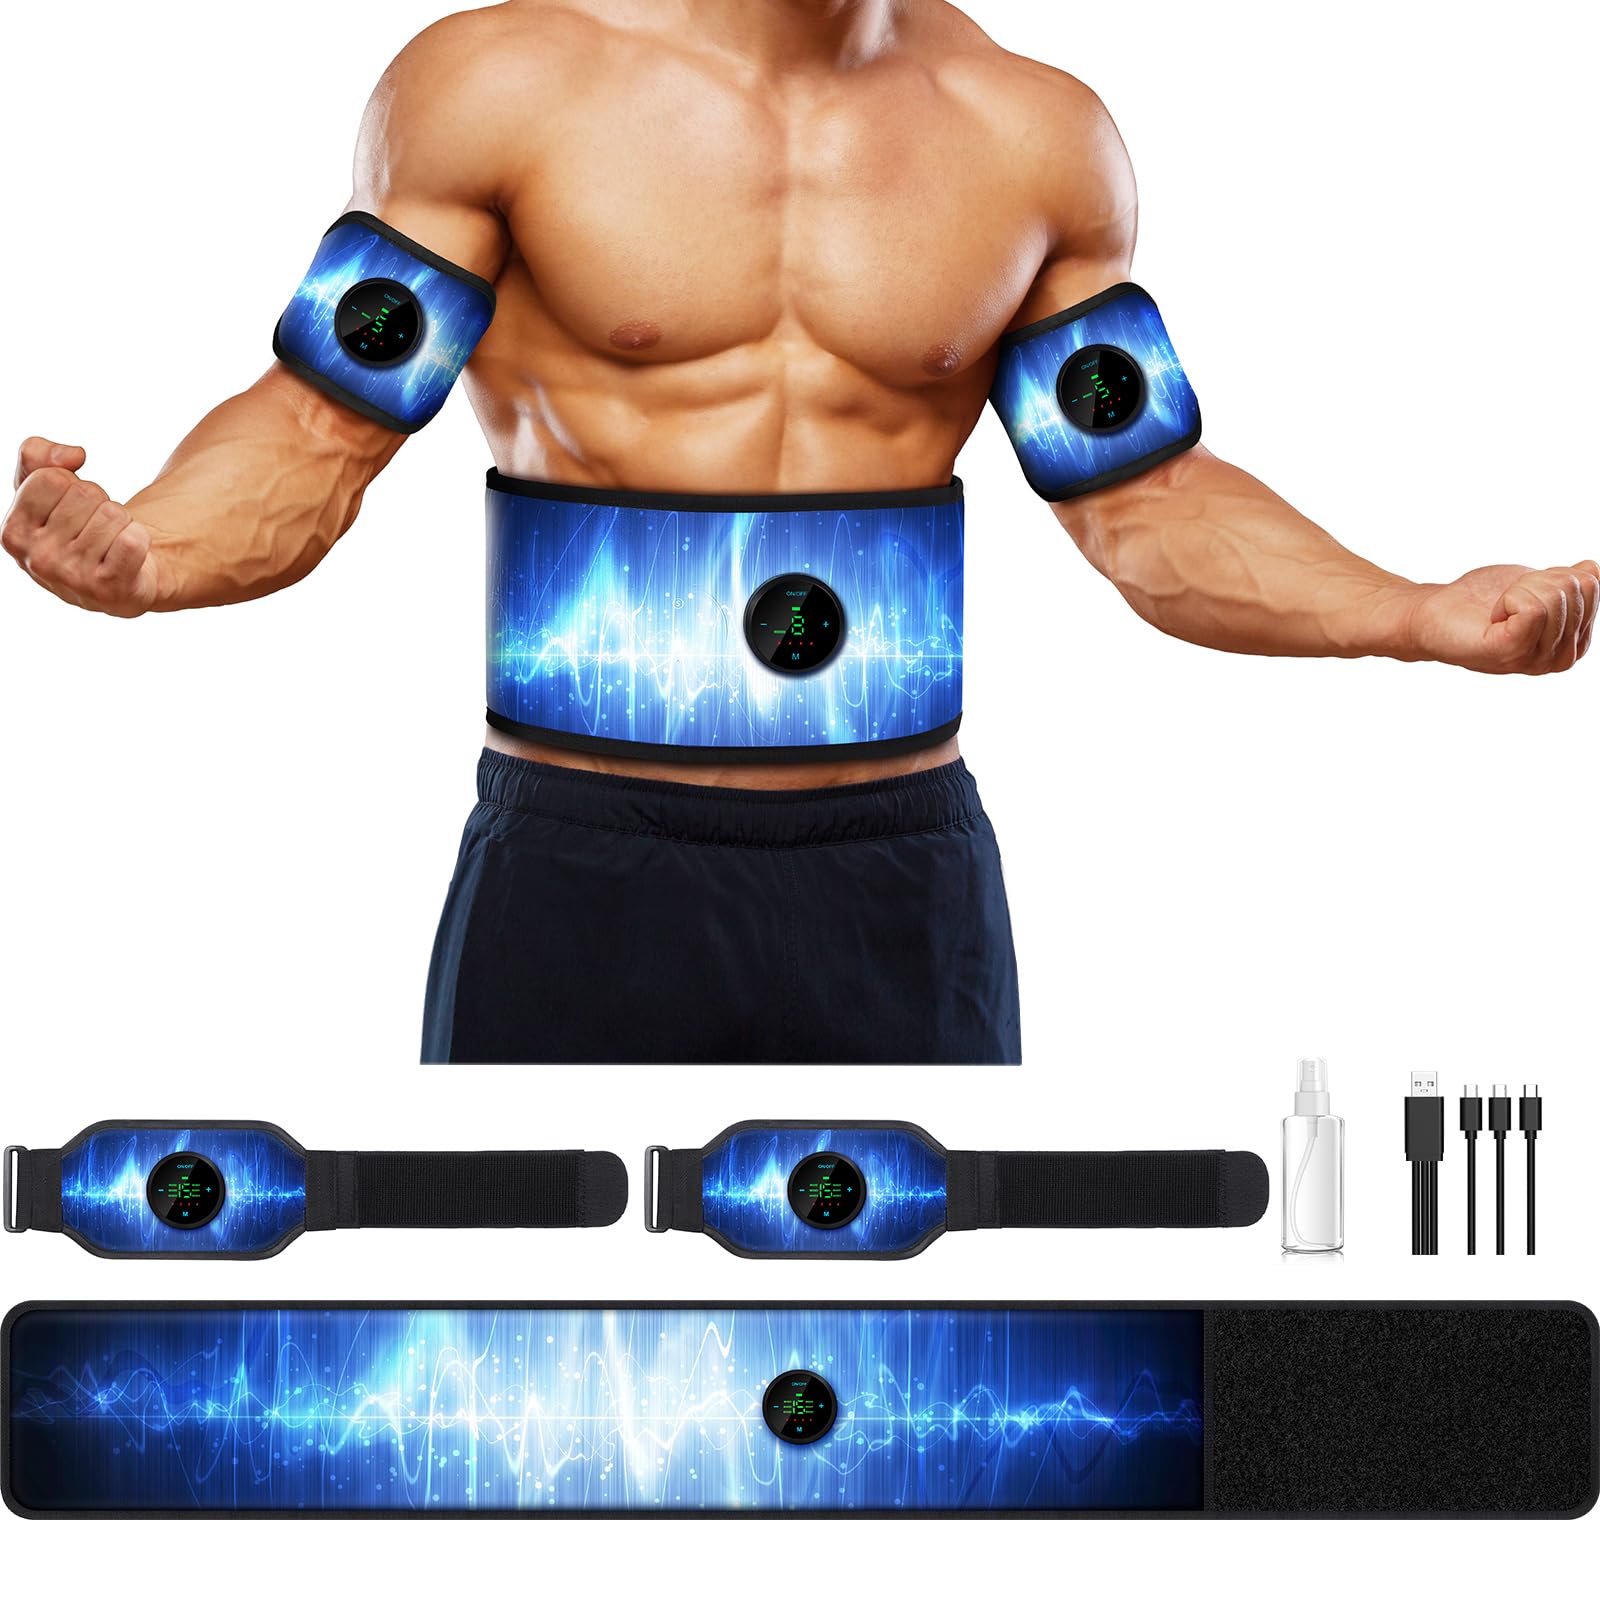 Smiofo ABS Stimulator Muscle Machine Workout Equipment Ab Toning Belt Muscle Toner Fitness Training for AbdomenArmLeg Ab